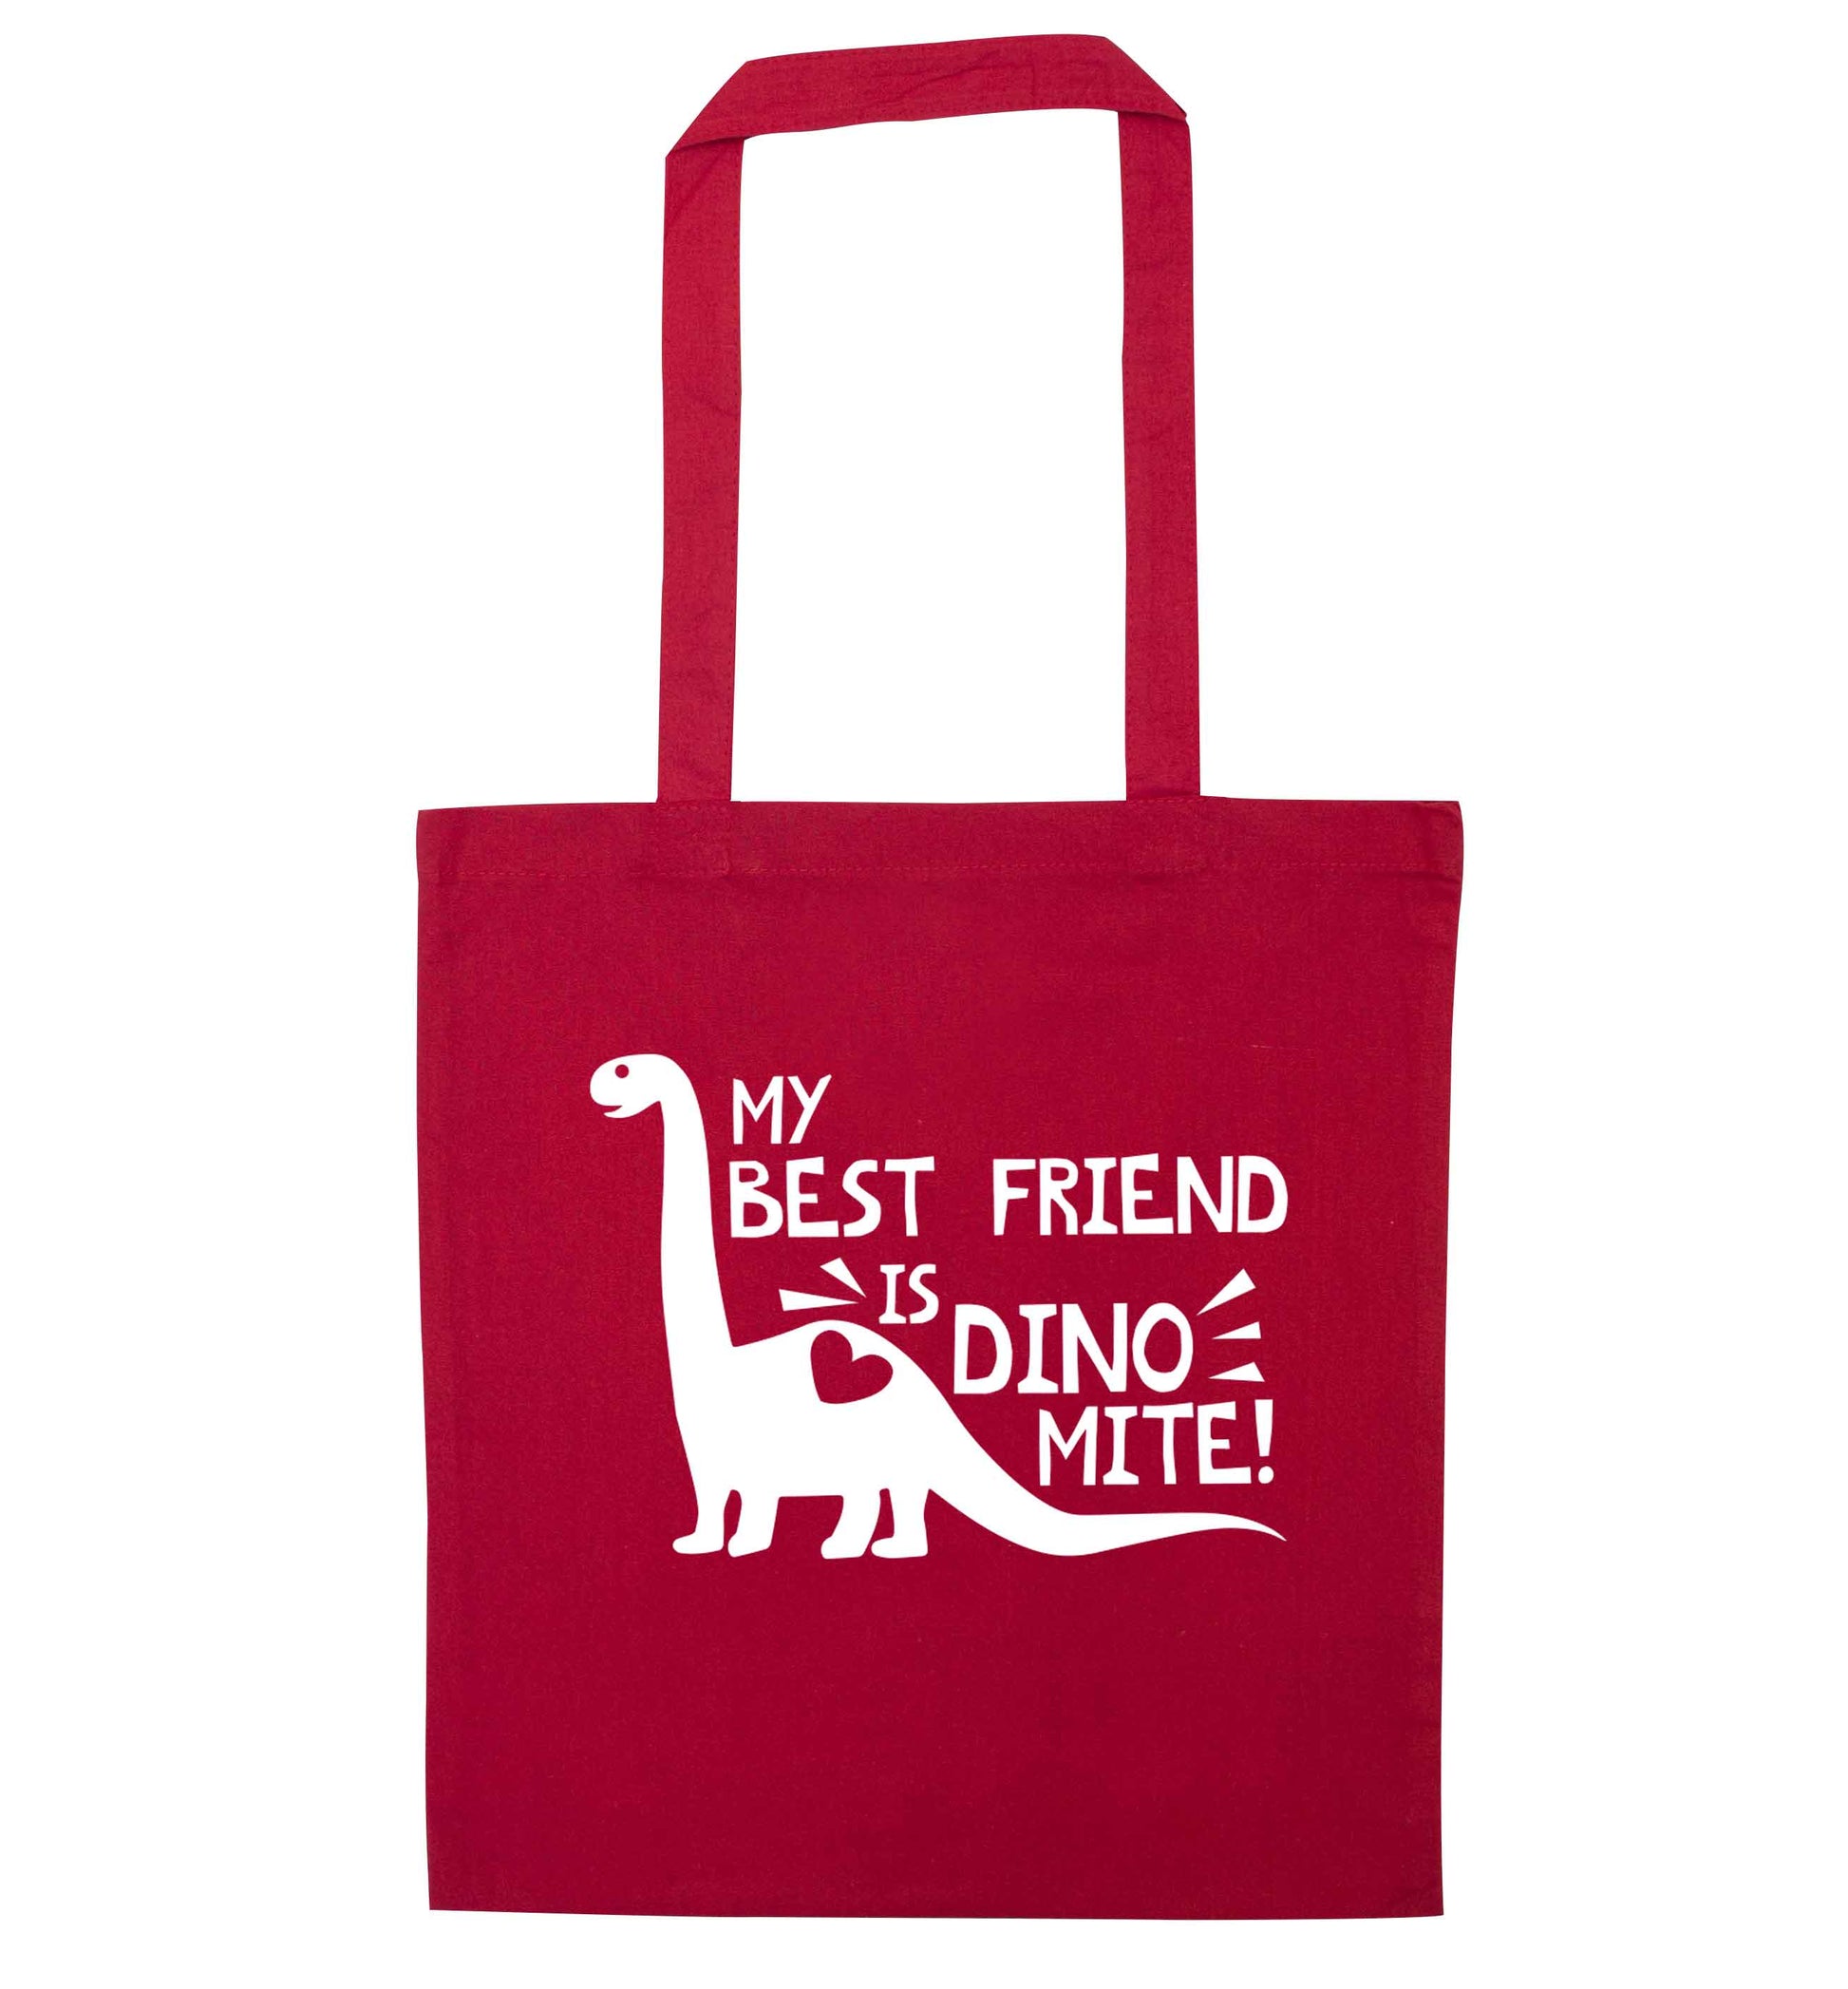 My best friend is dinomite! red tote bag